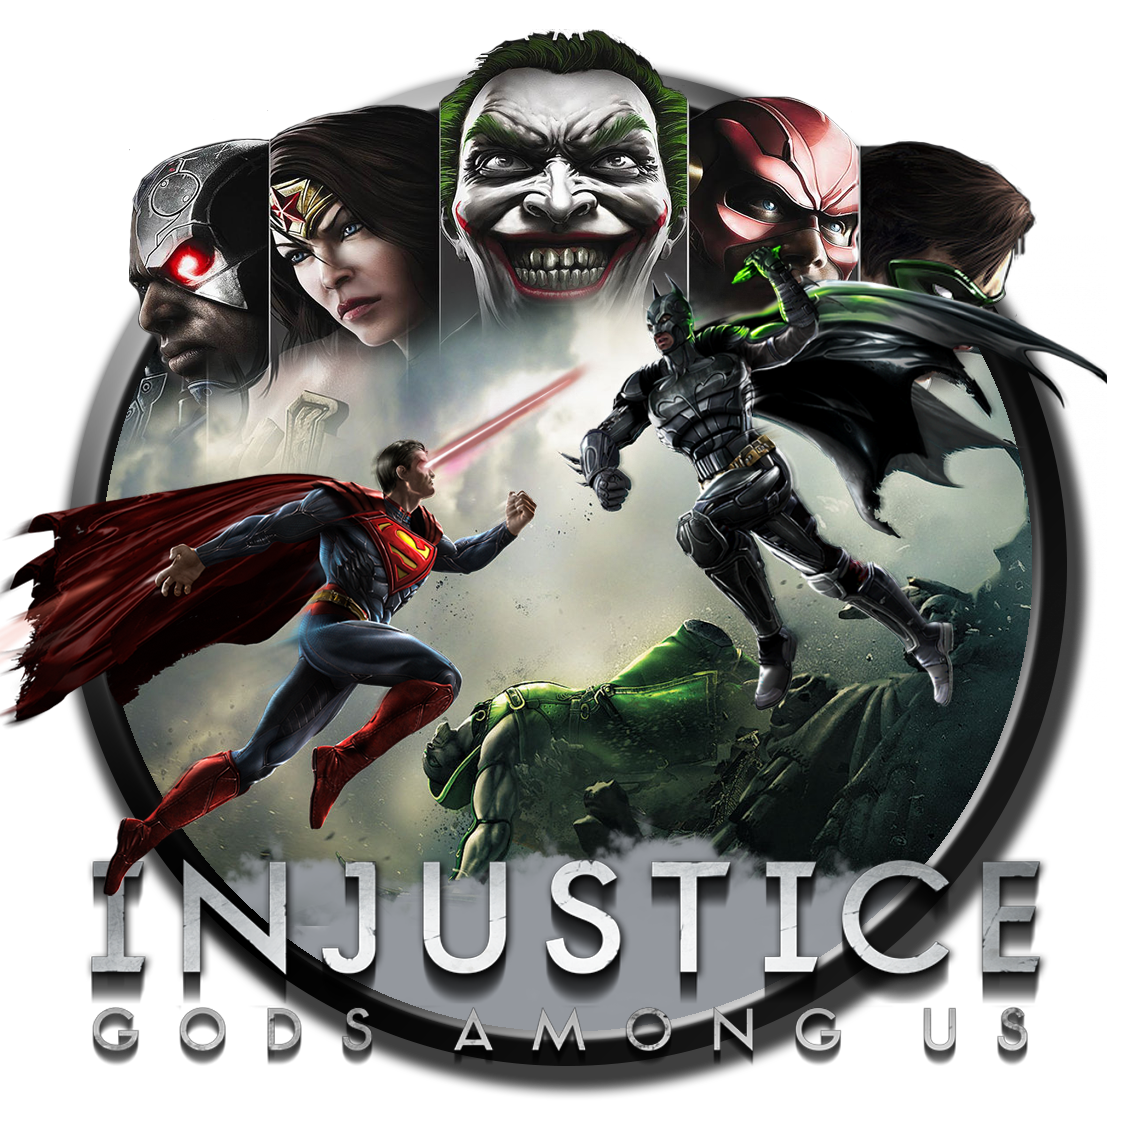 Injustice gods андроид. Injustice 1. Иконка Injustice - Gods among us Ultimate Edition. Инджастис among us. Инджастис персонажи Ultimate Edition.